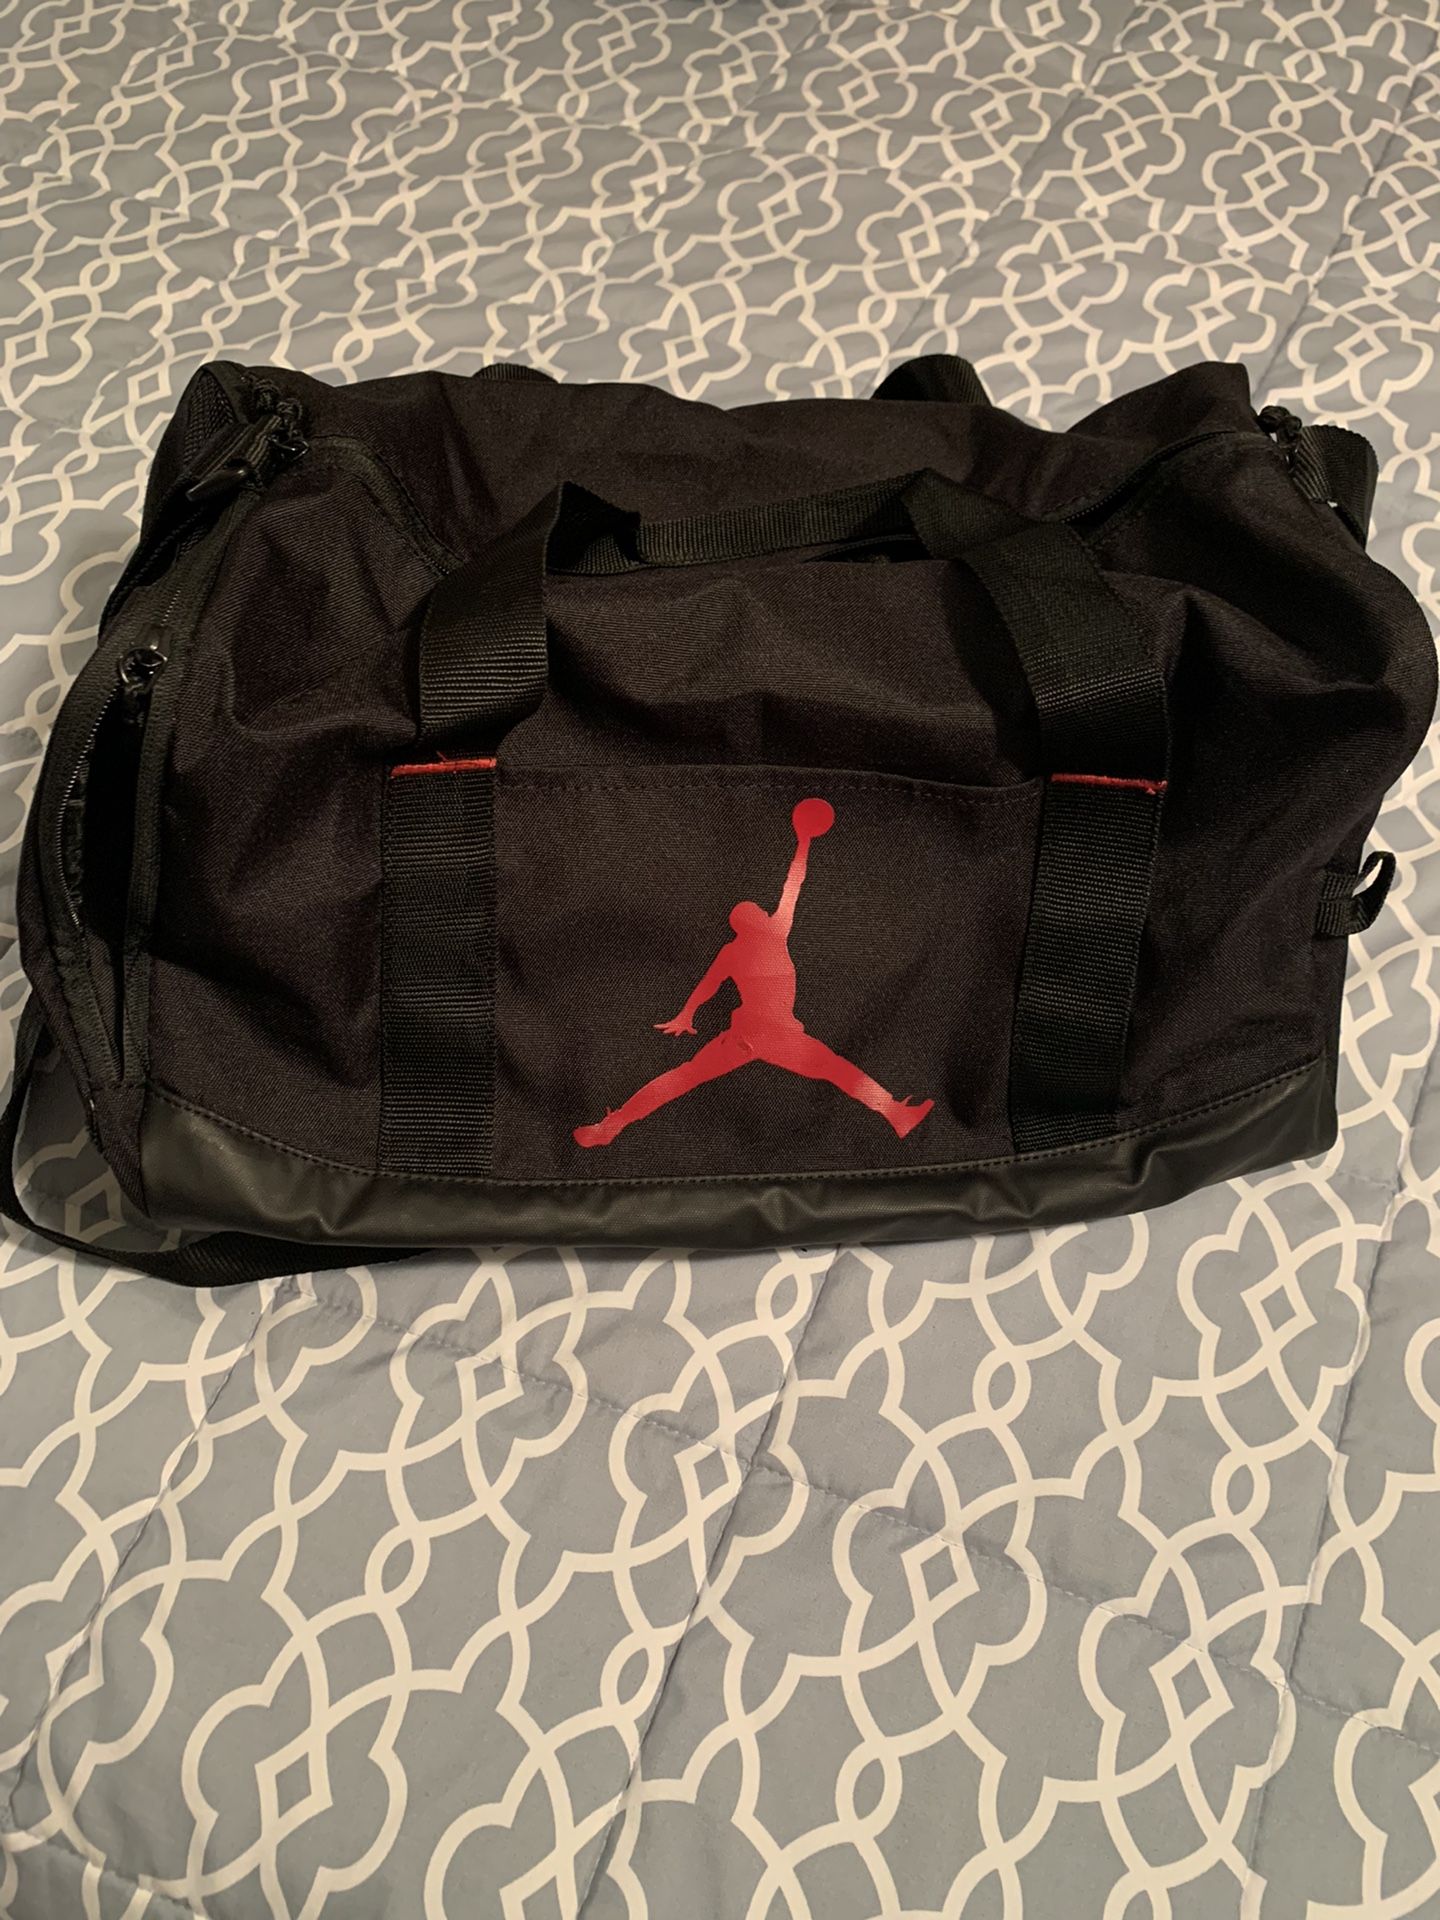 Jordan Duffel Bag